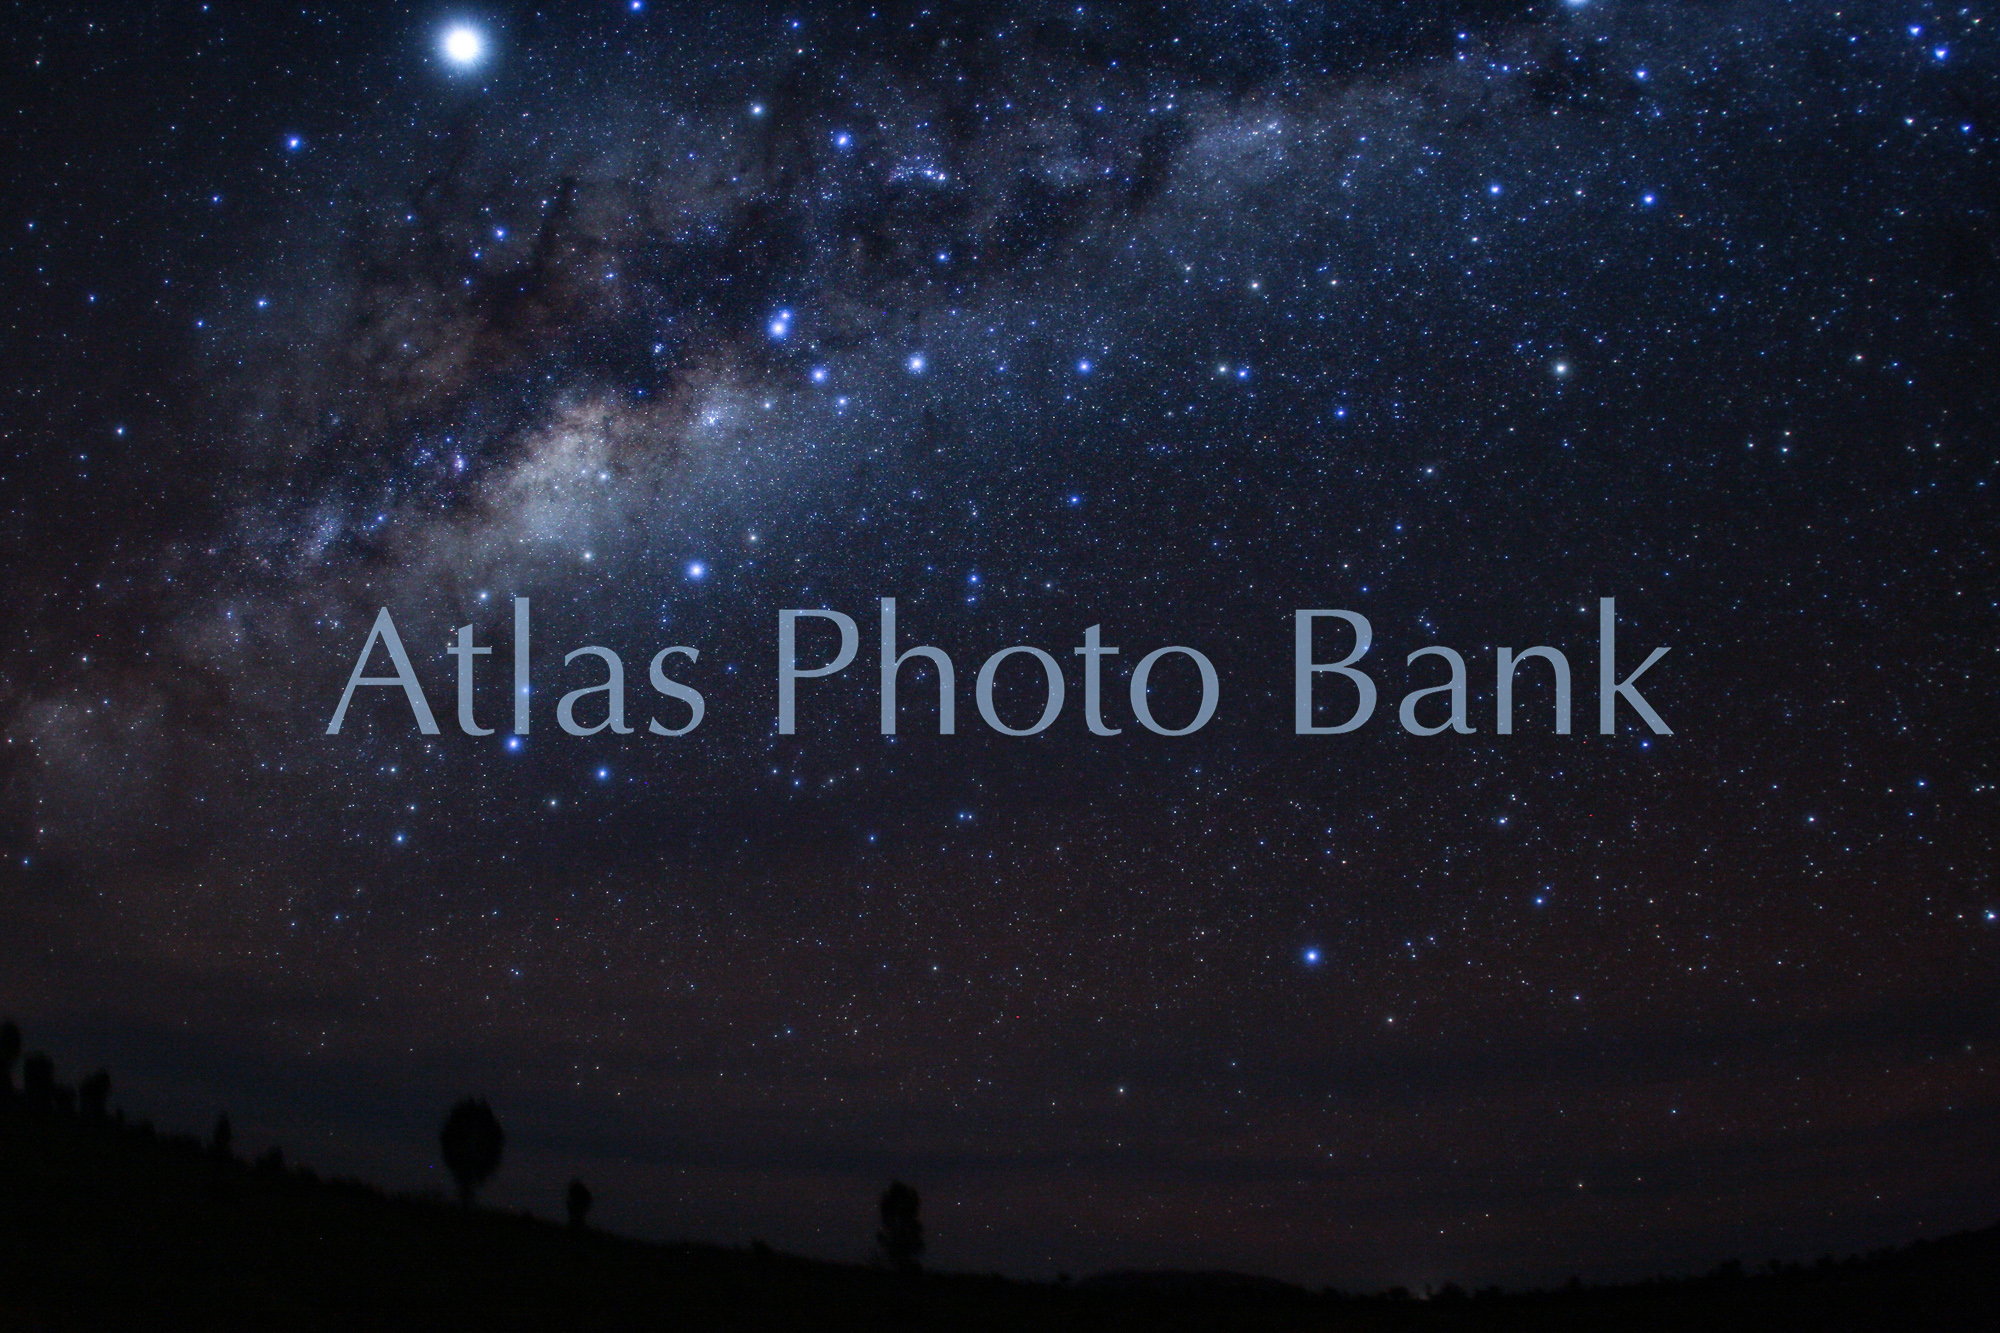 MWP-043-光りの雲と明るい星々と暗黒帯がおりなす複雑な天の川の様相